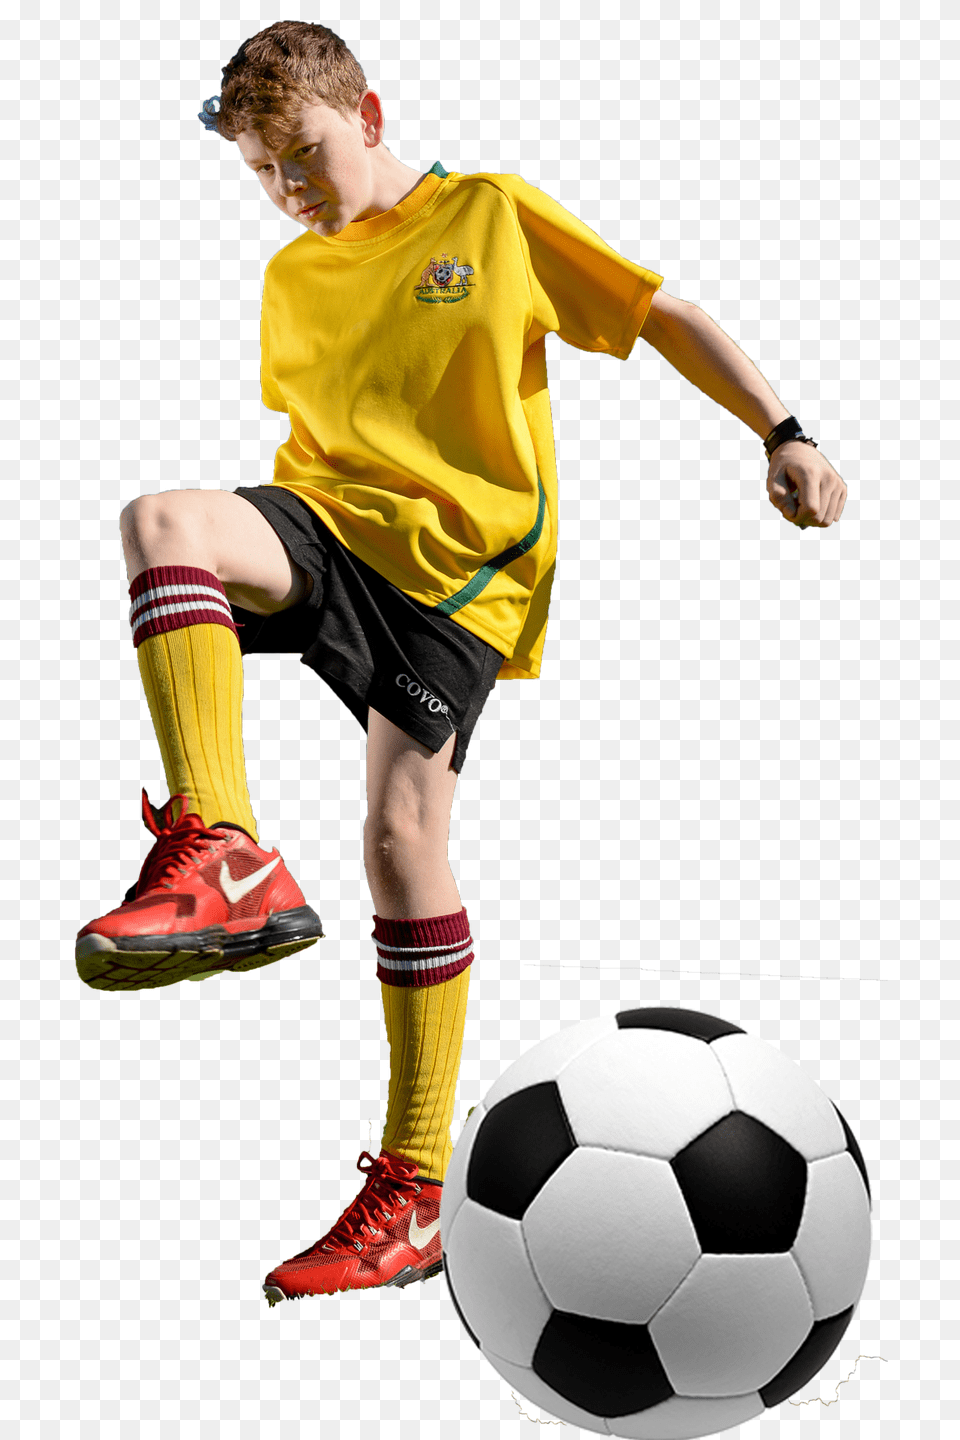 Transplant Australia Football Club, Ball, Sphere, Soccer Ball, Soccer Png Image